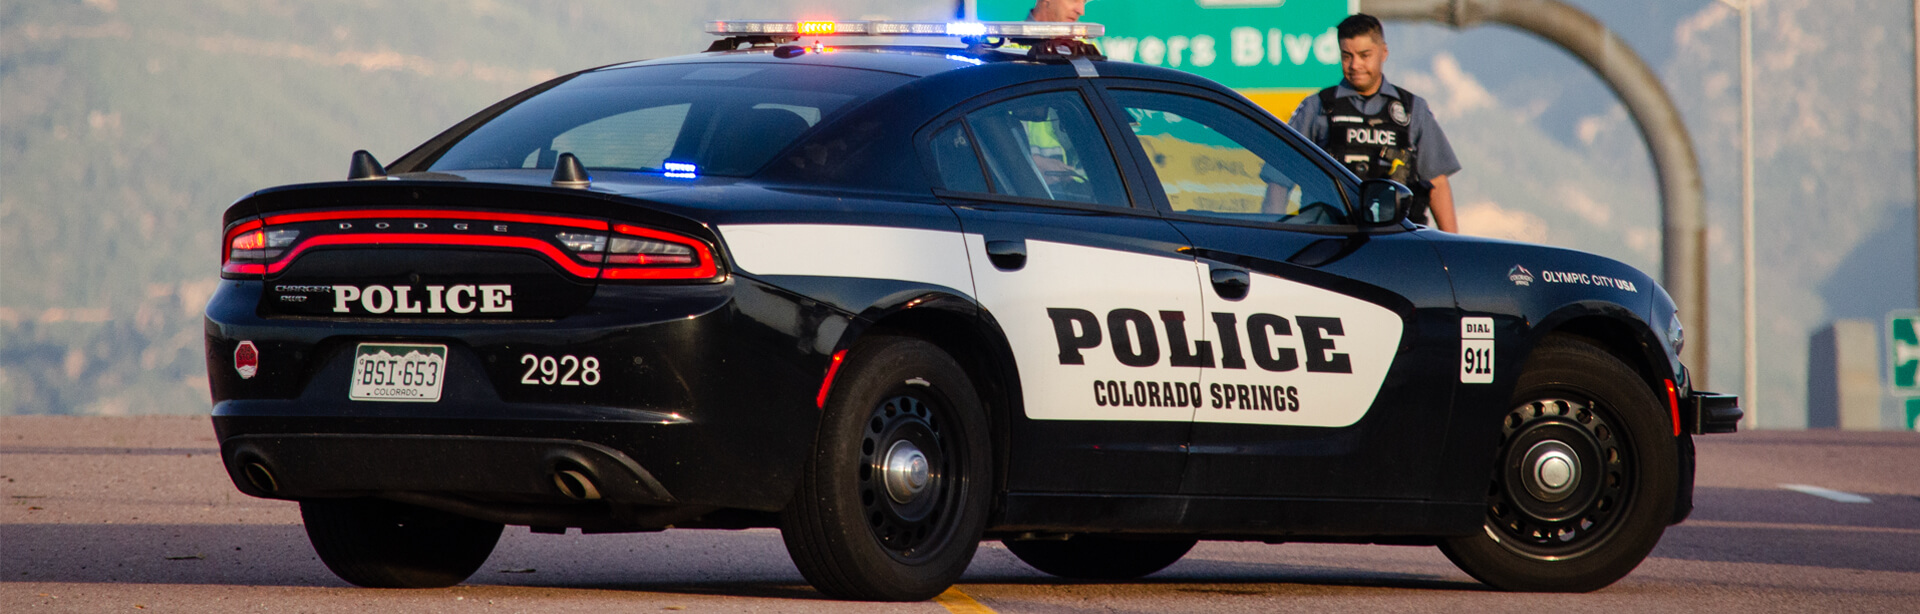 Colorado Springs Police 